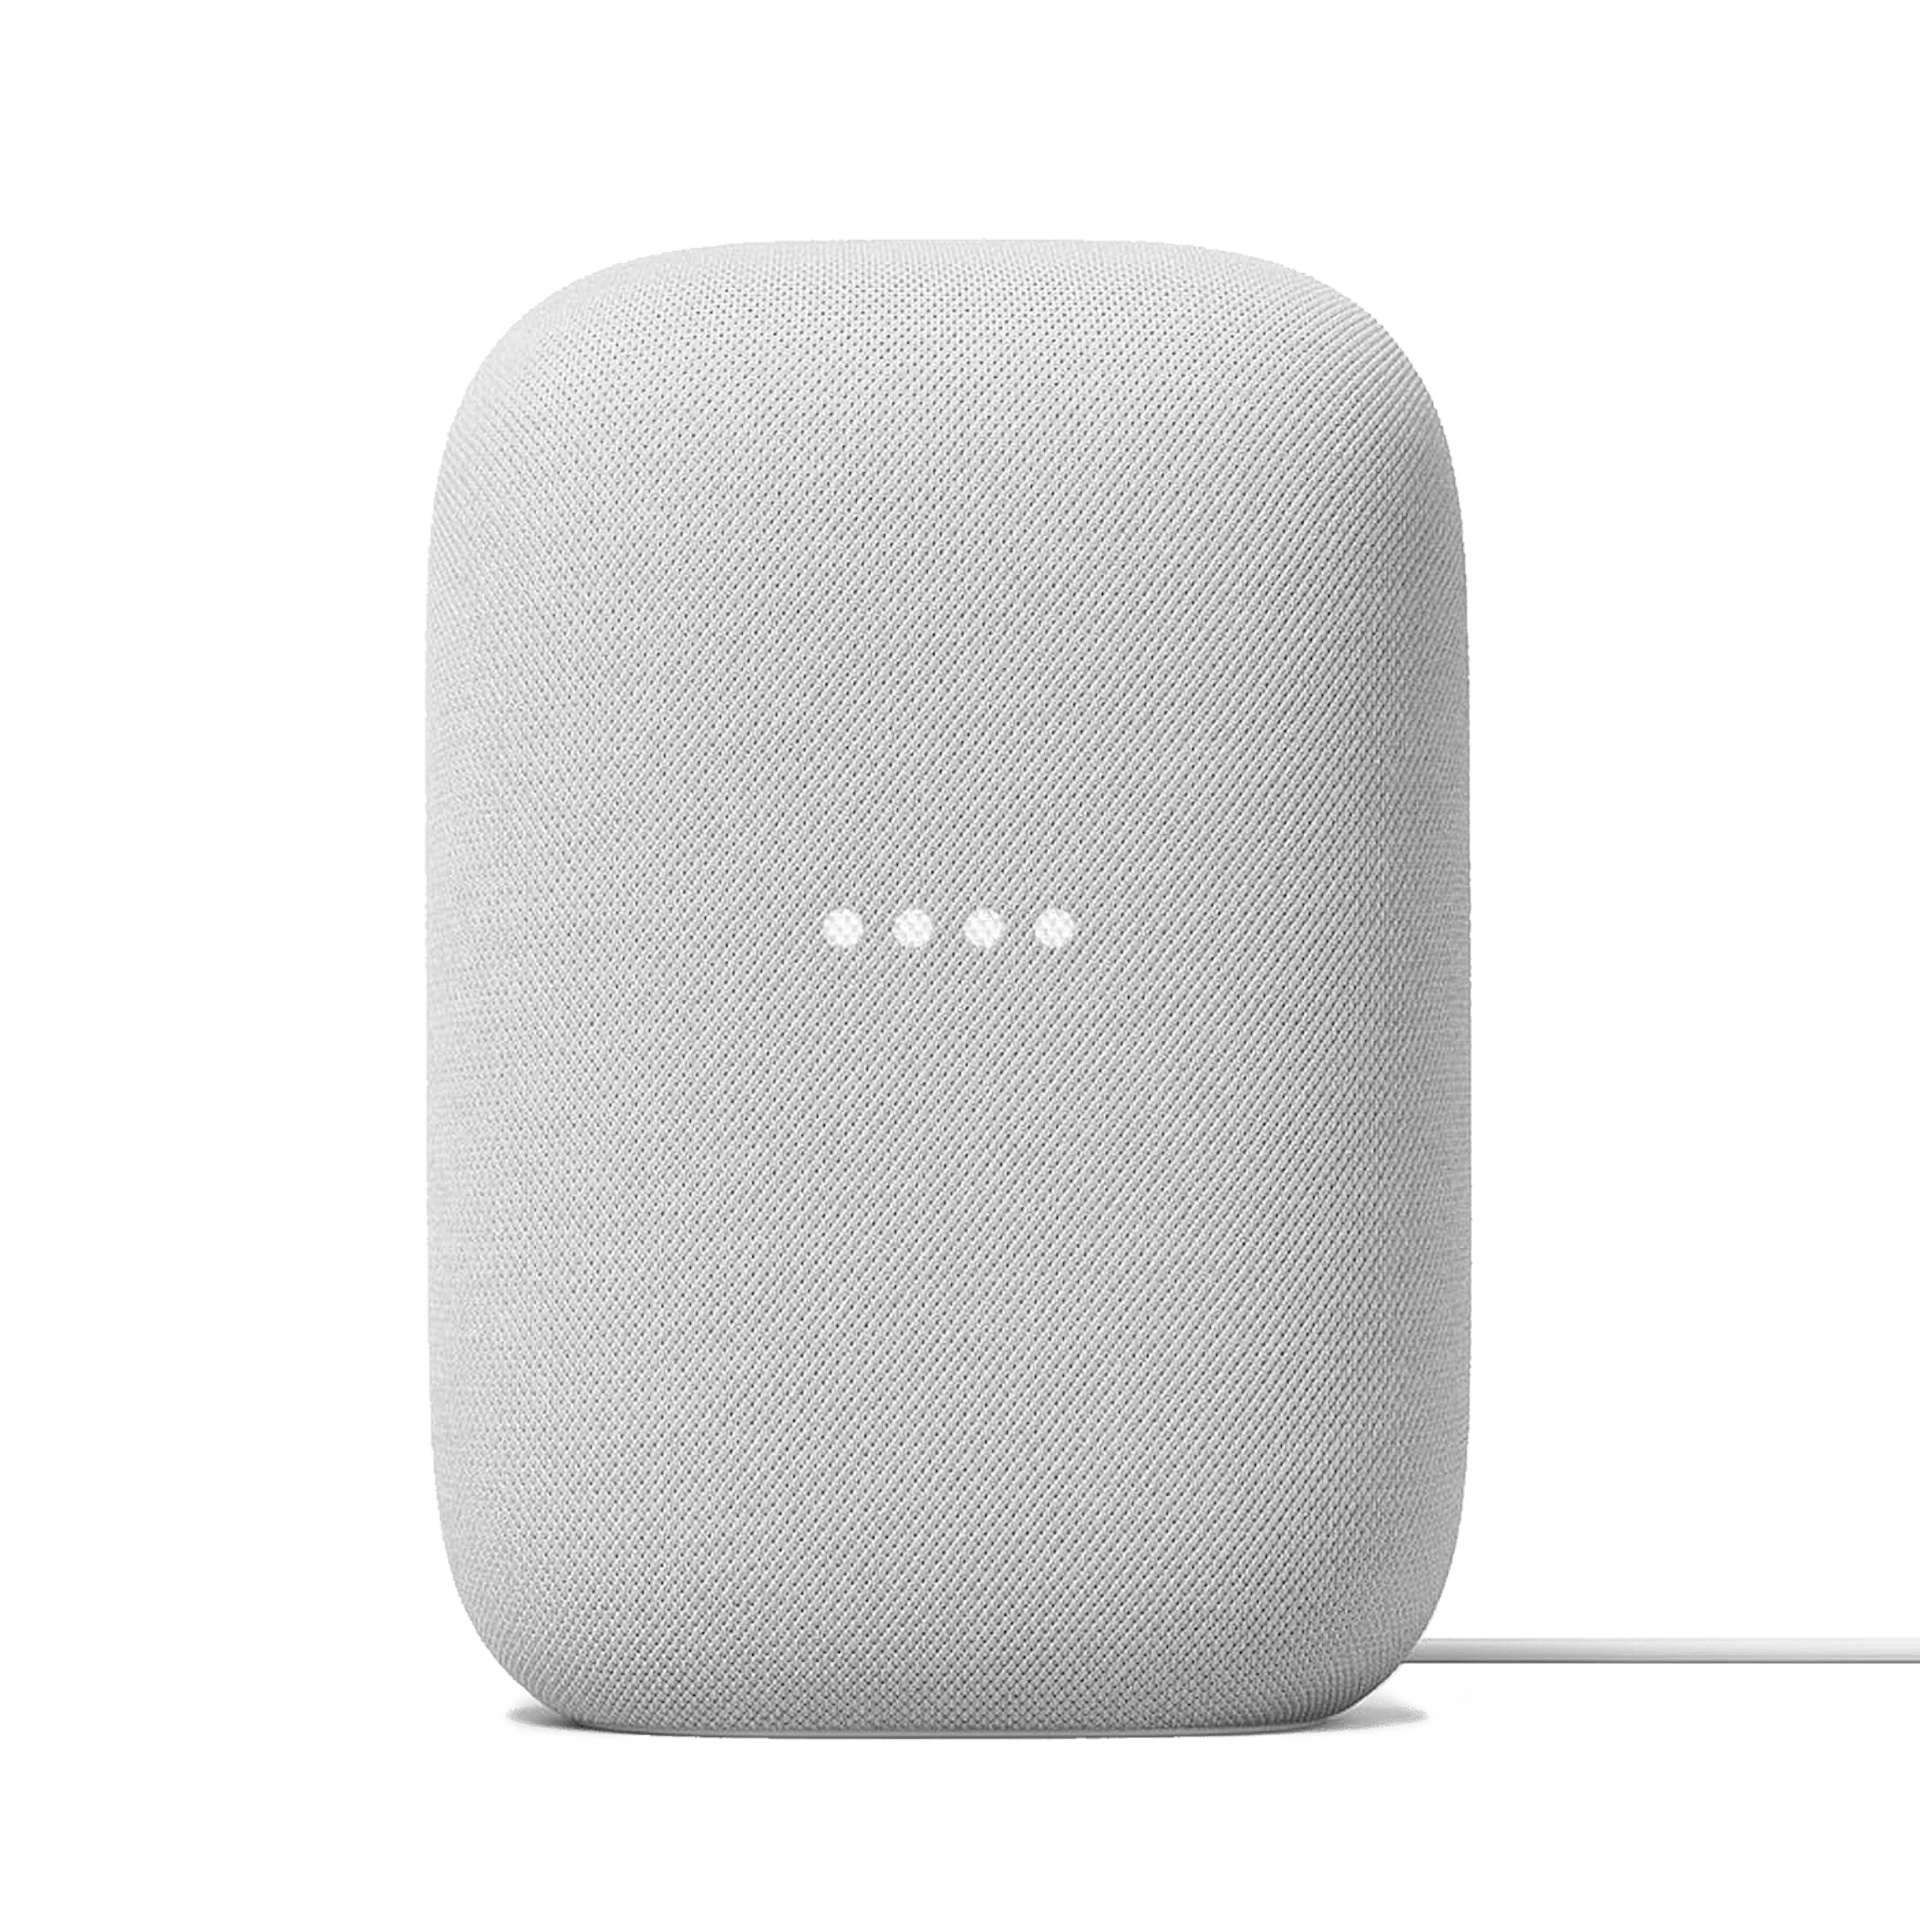 Google Nest Audio - Slimme speaker en spraakassistent